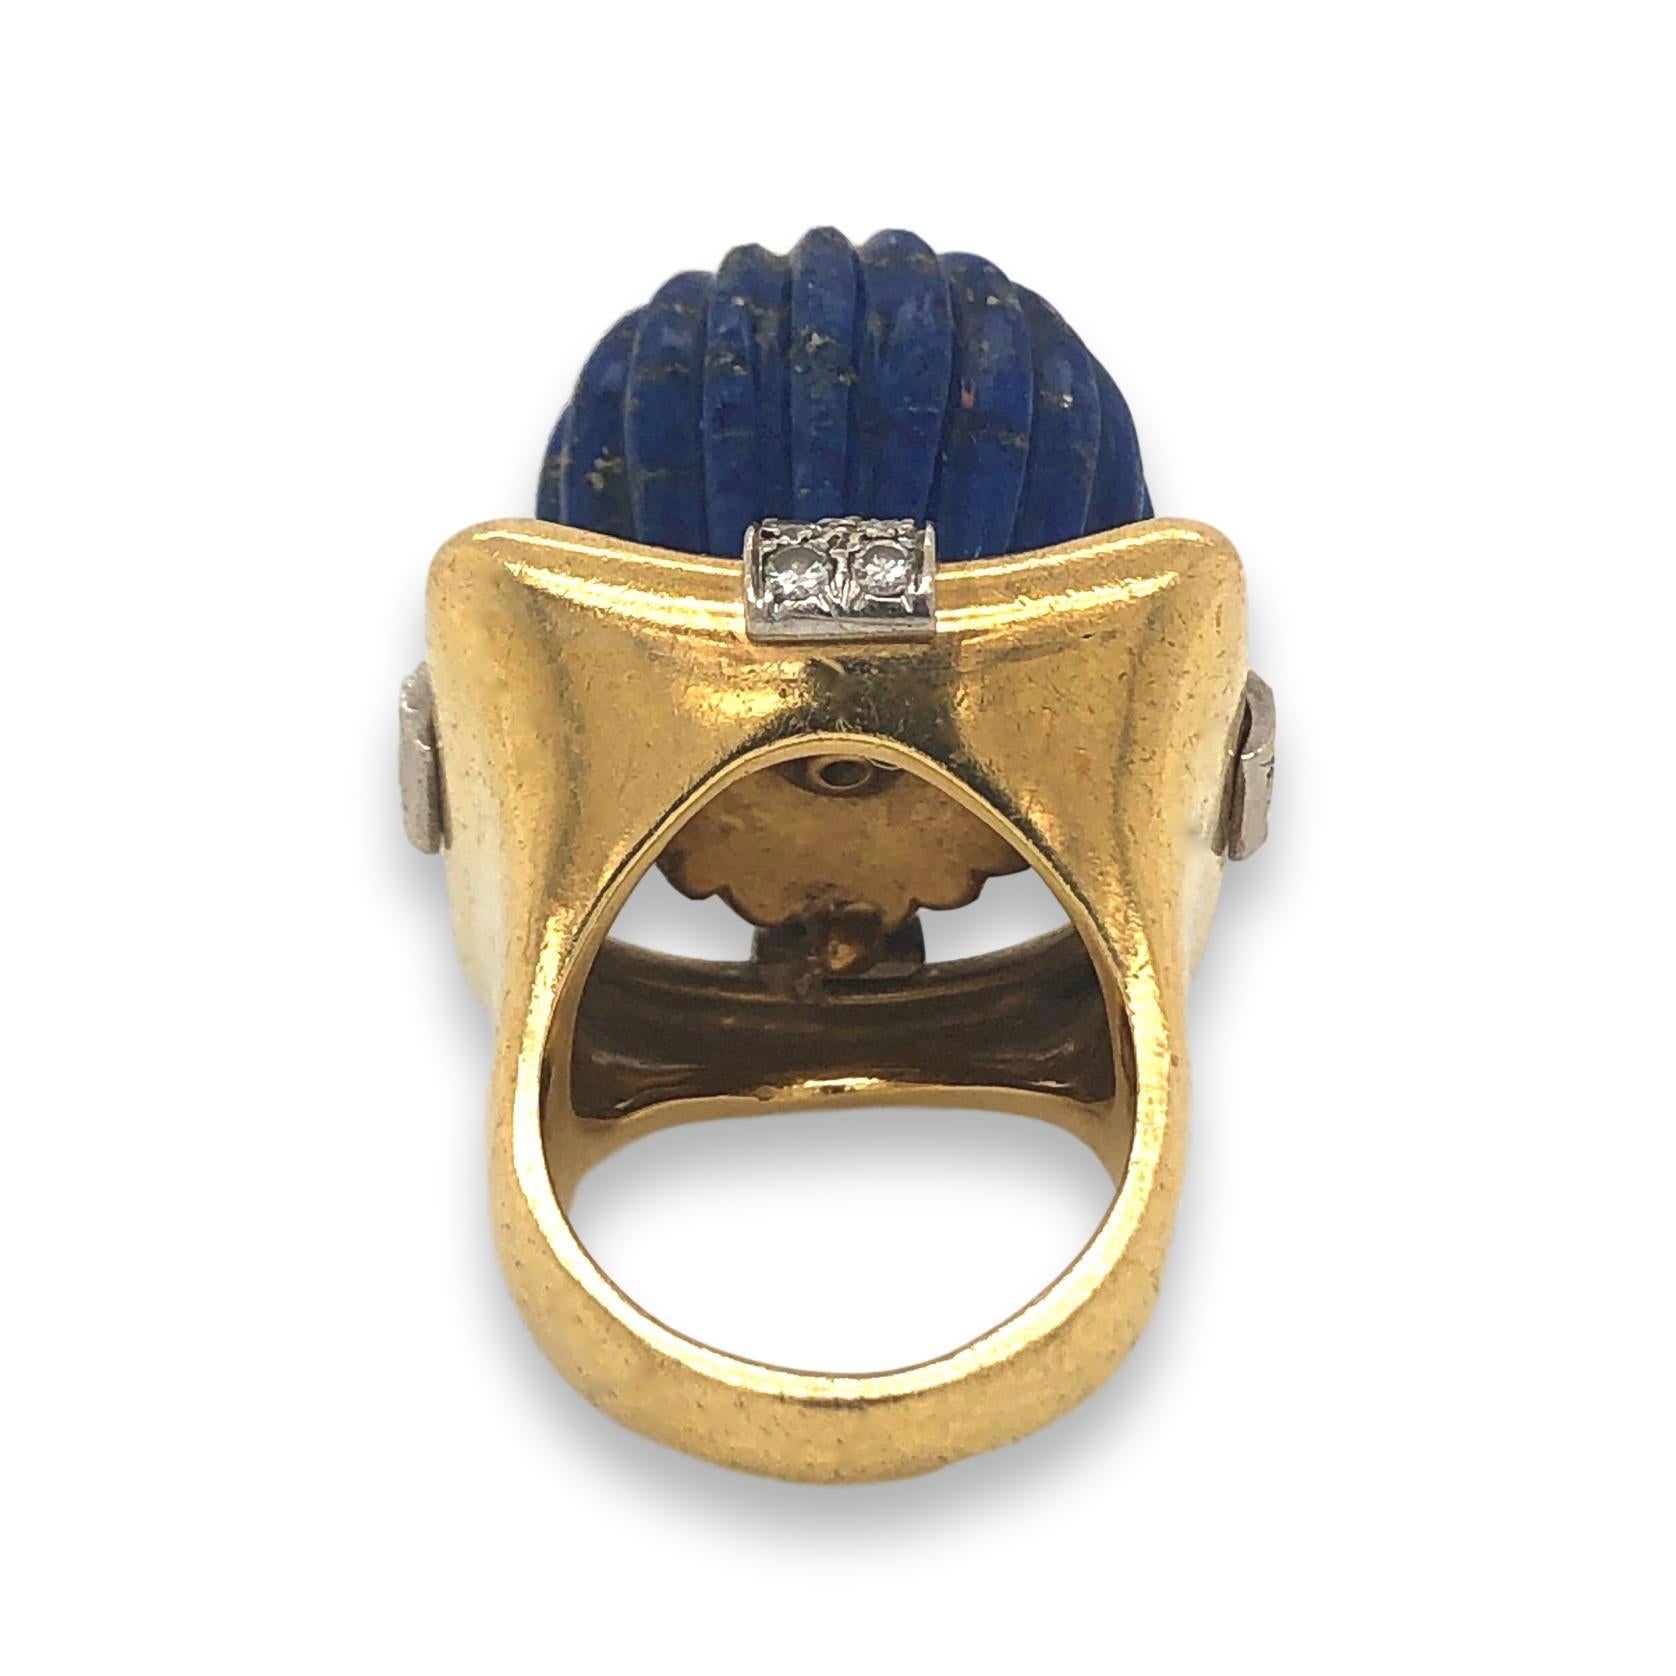 Brilliant Cut Lapis Lazuli Gold and Diamond 1970s Statement Ring